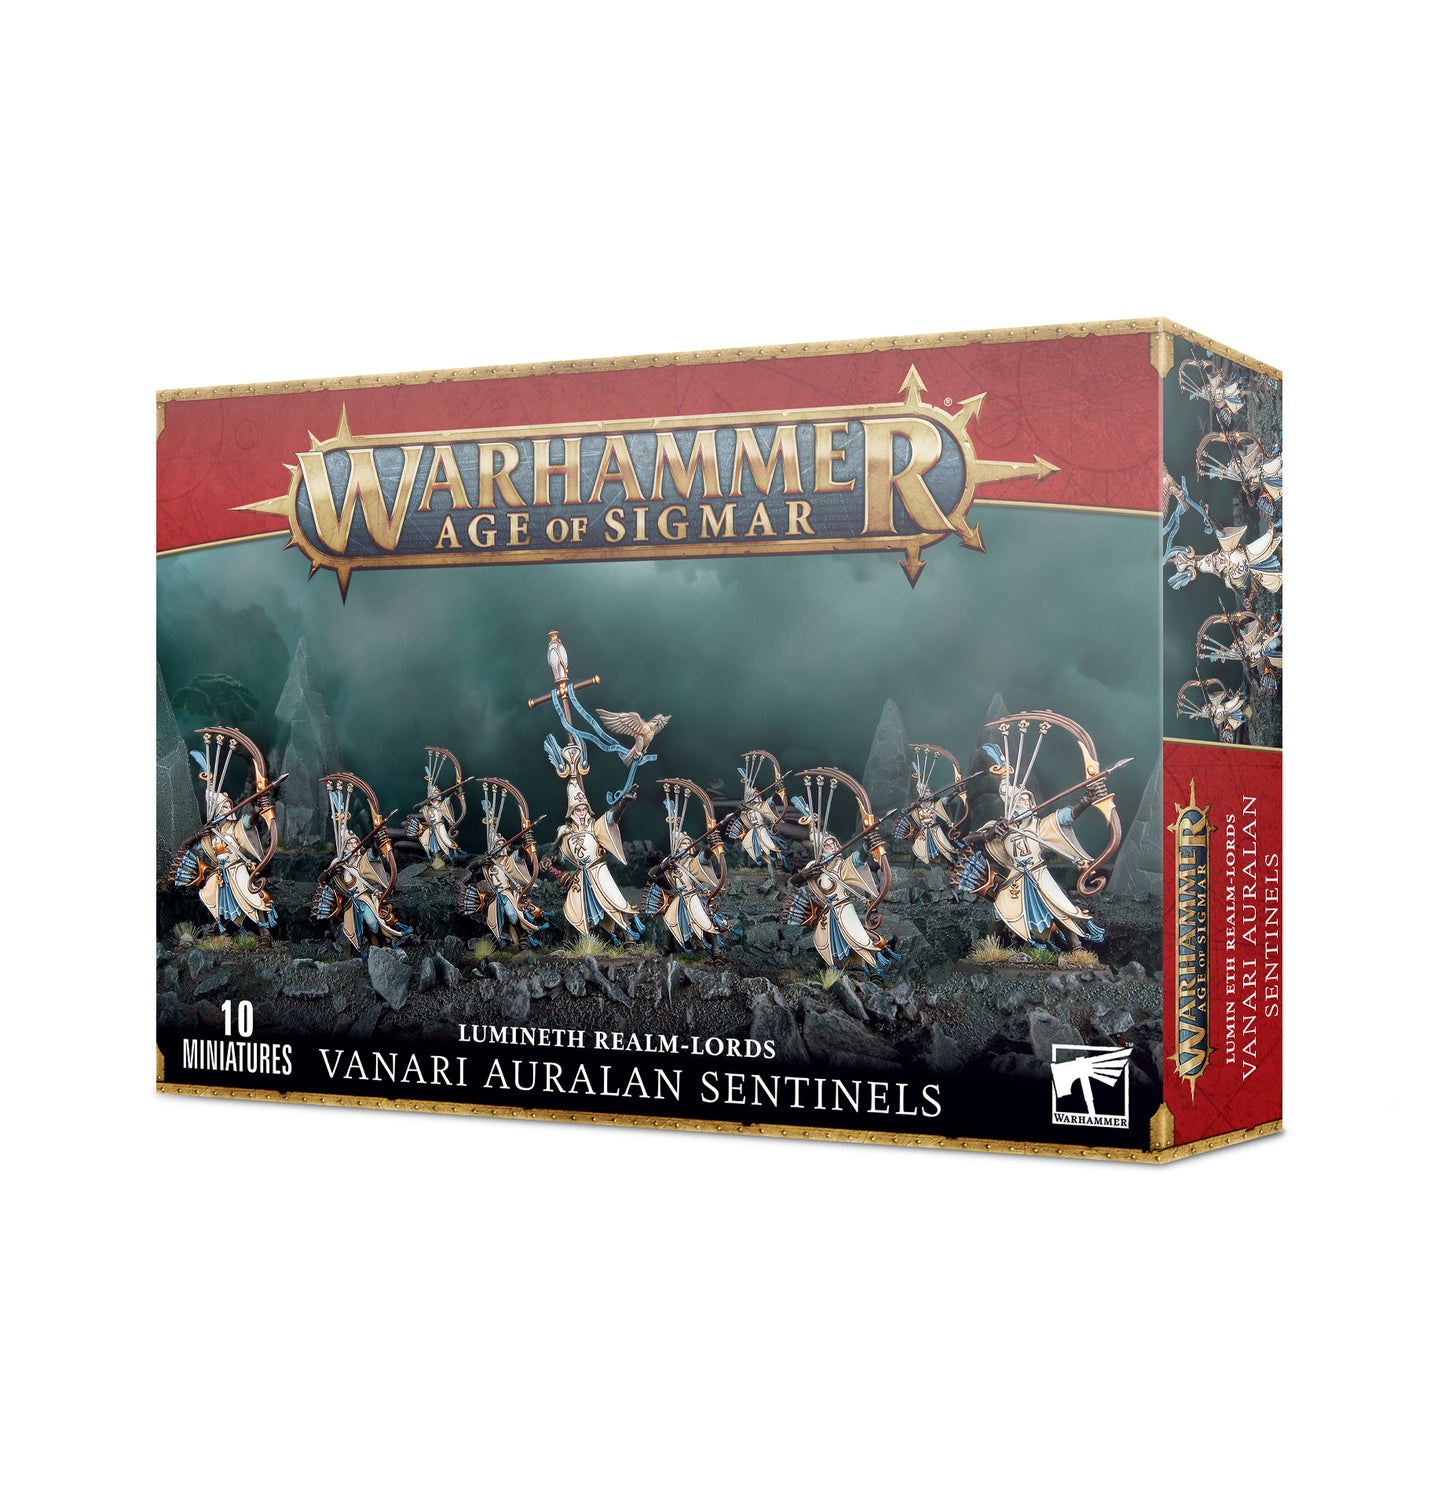 Warhammer Age Of Sigma - Lumineth Realm-Lords Vanari Auralan Sentinels